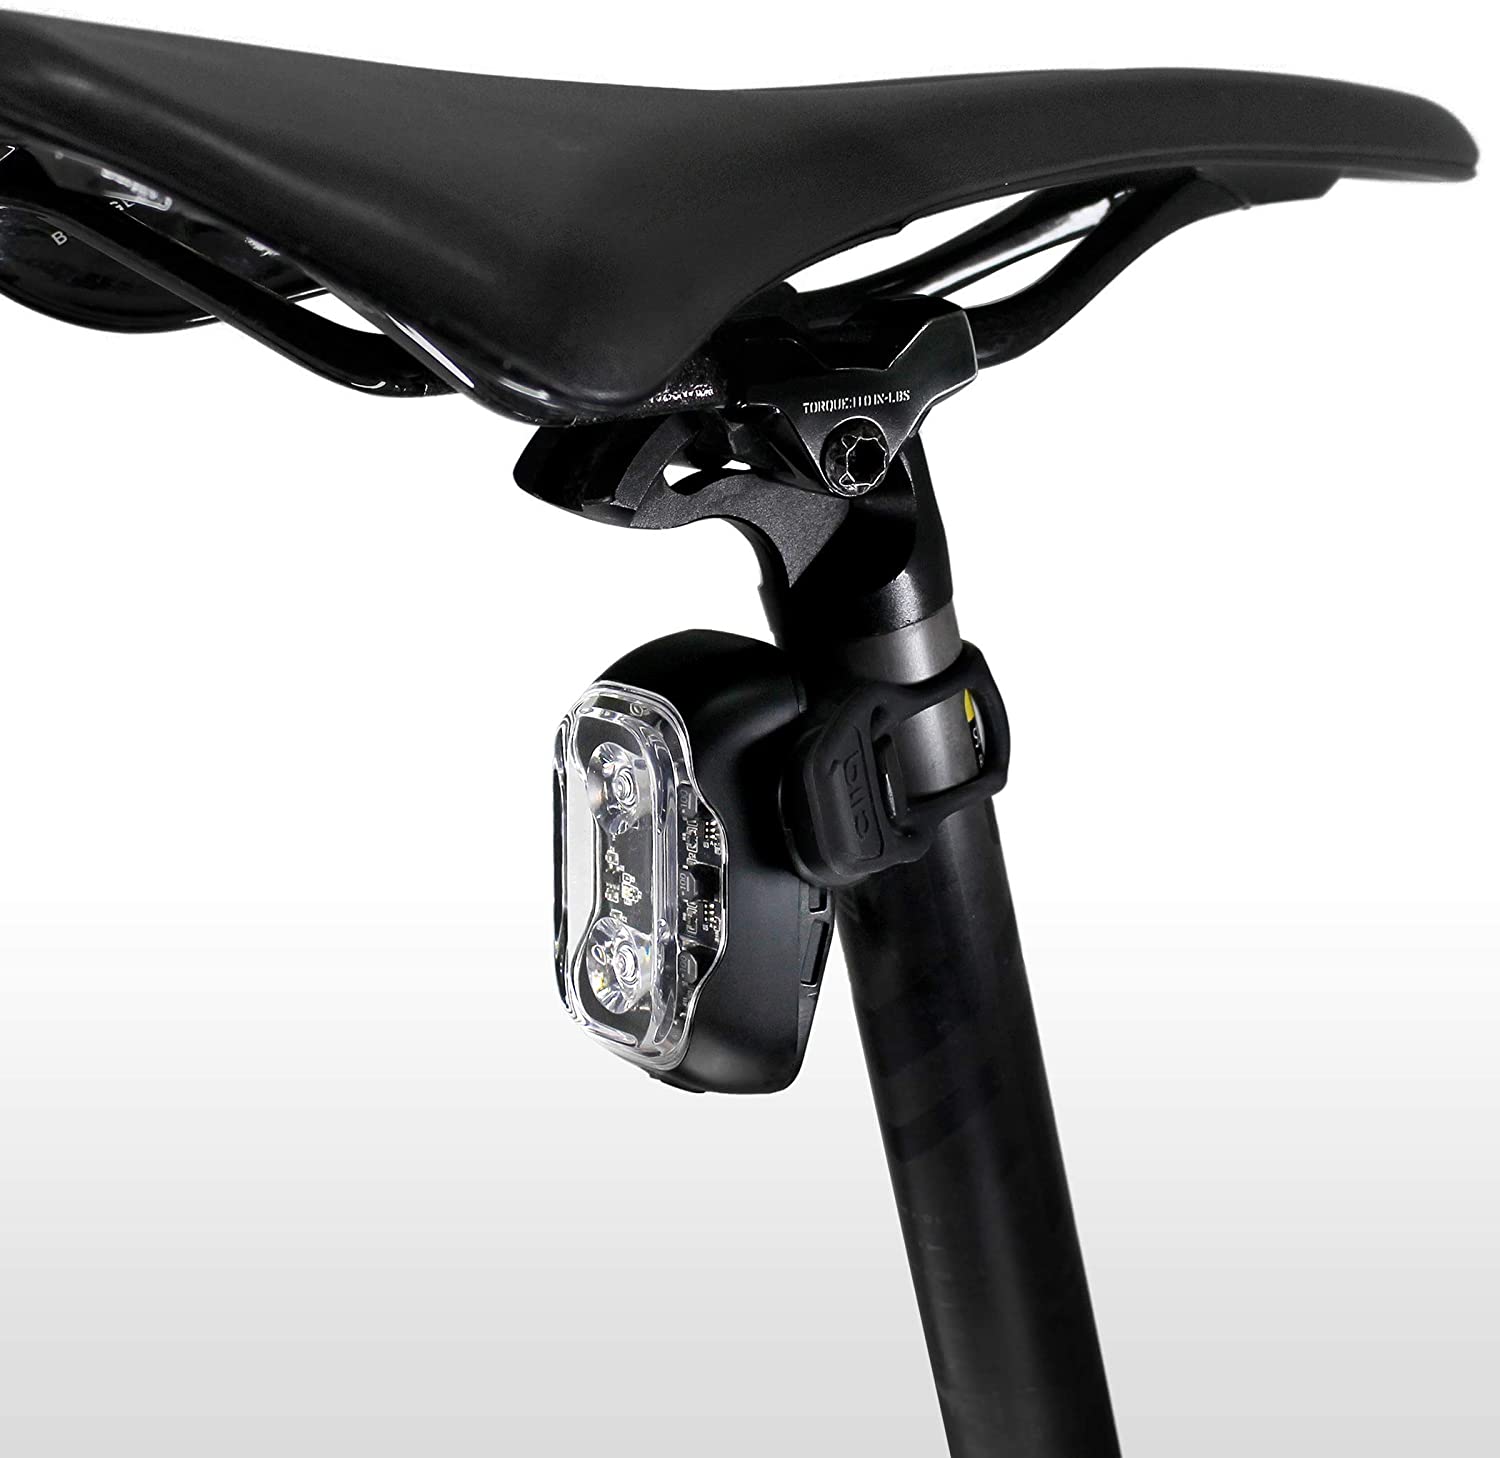 Hauteworks Cliq Smart Bicycle Taillight